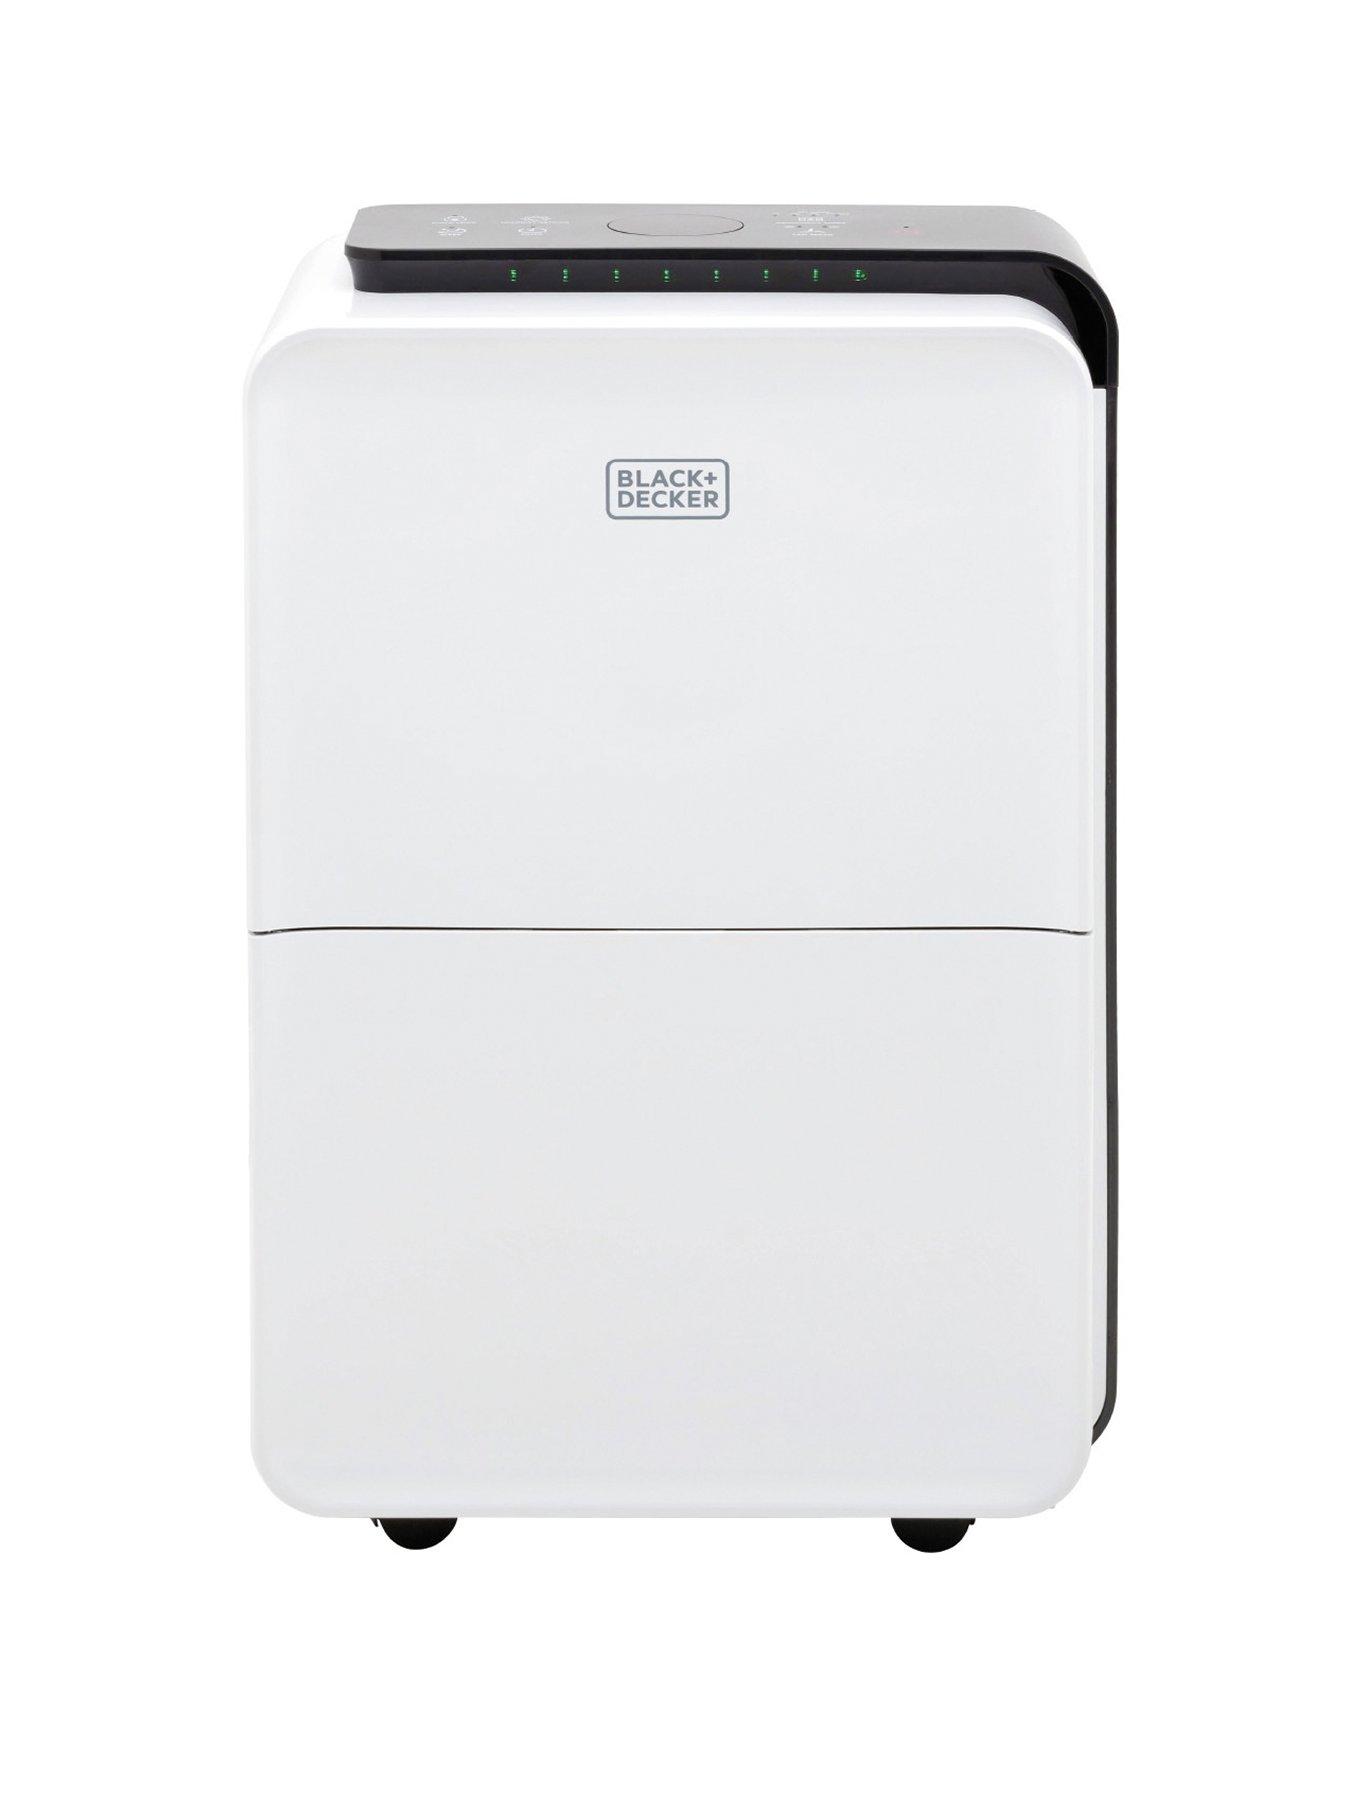 Black and Decker 20L Smart Dehumidifier BXEH600014GB - White